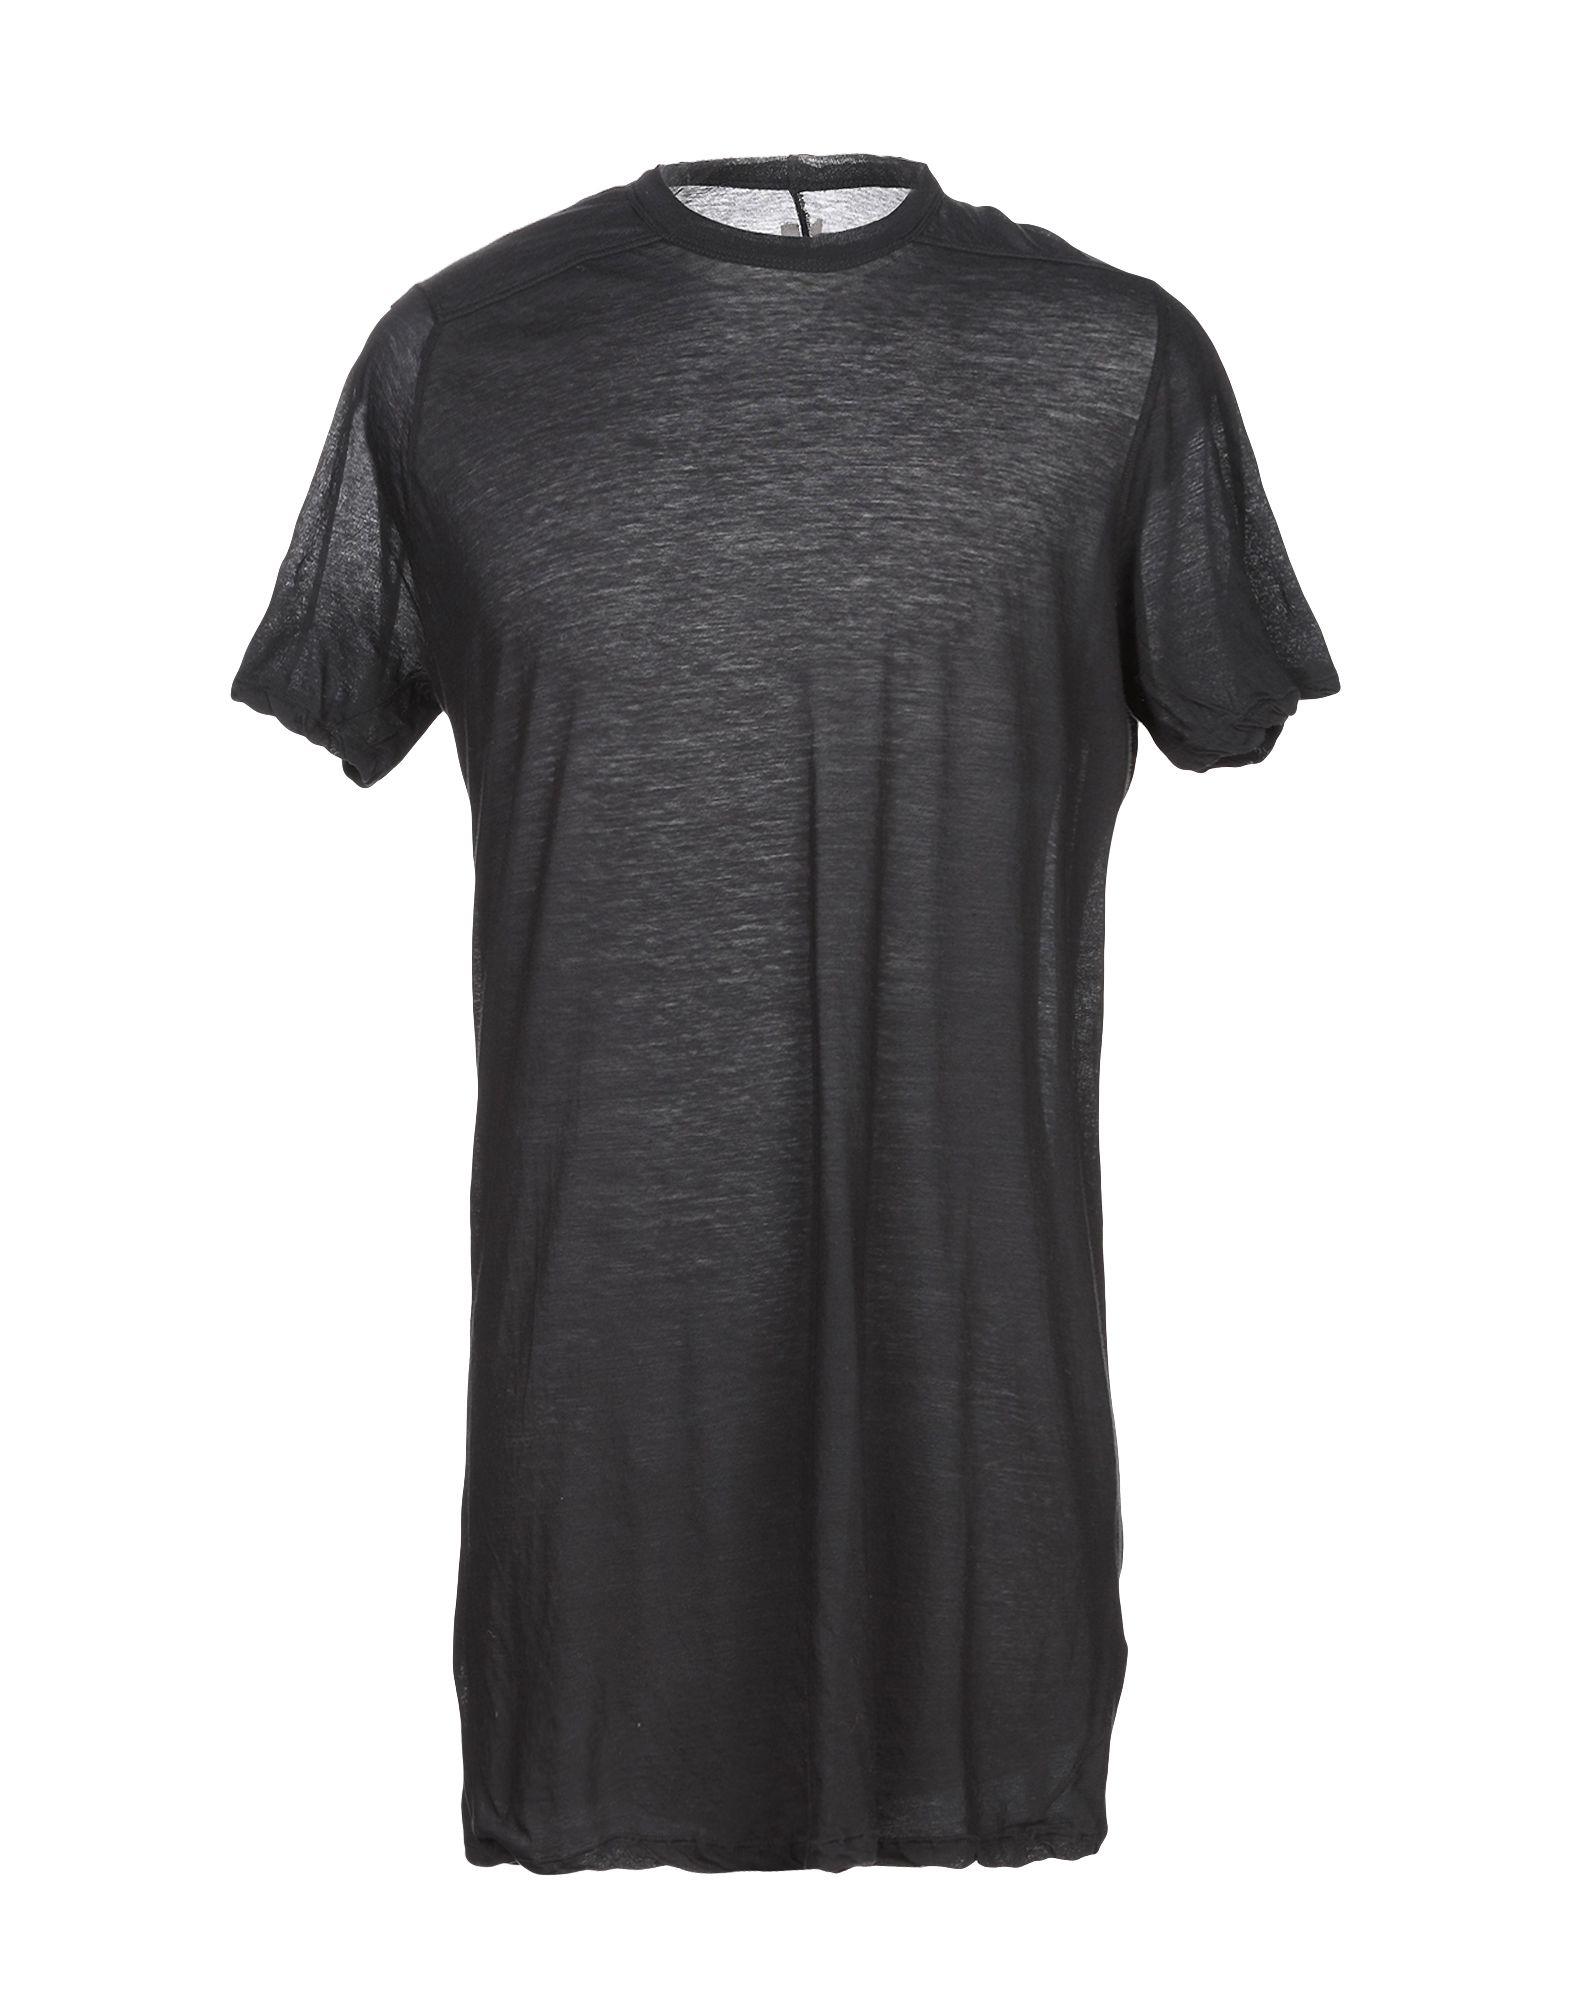 Rick Owens T-shirt in Black for Men - Lyst